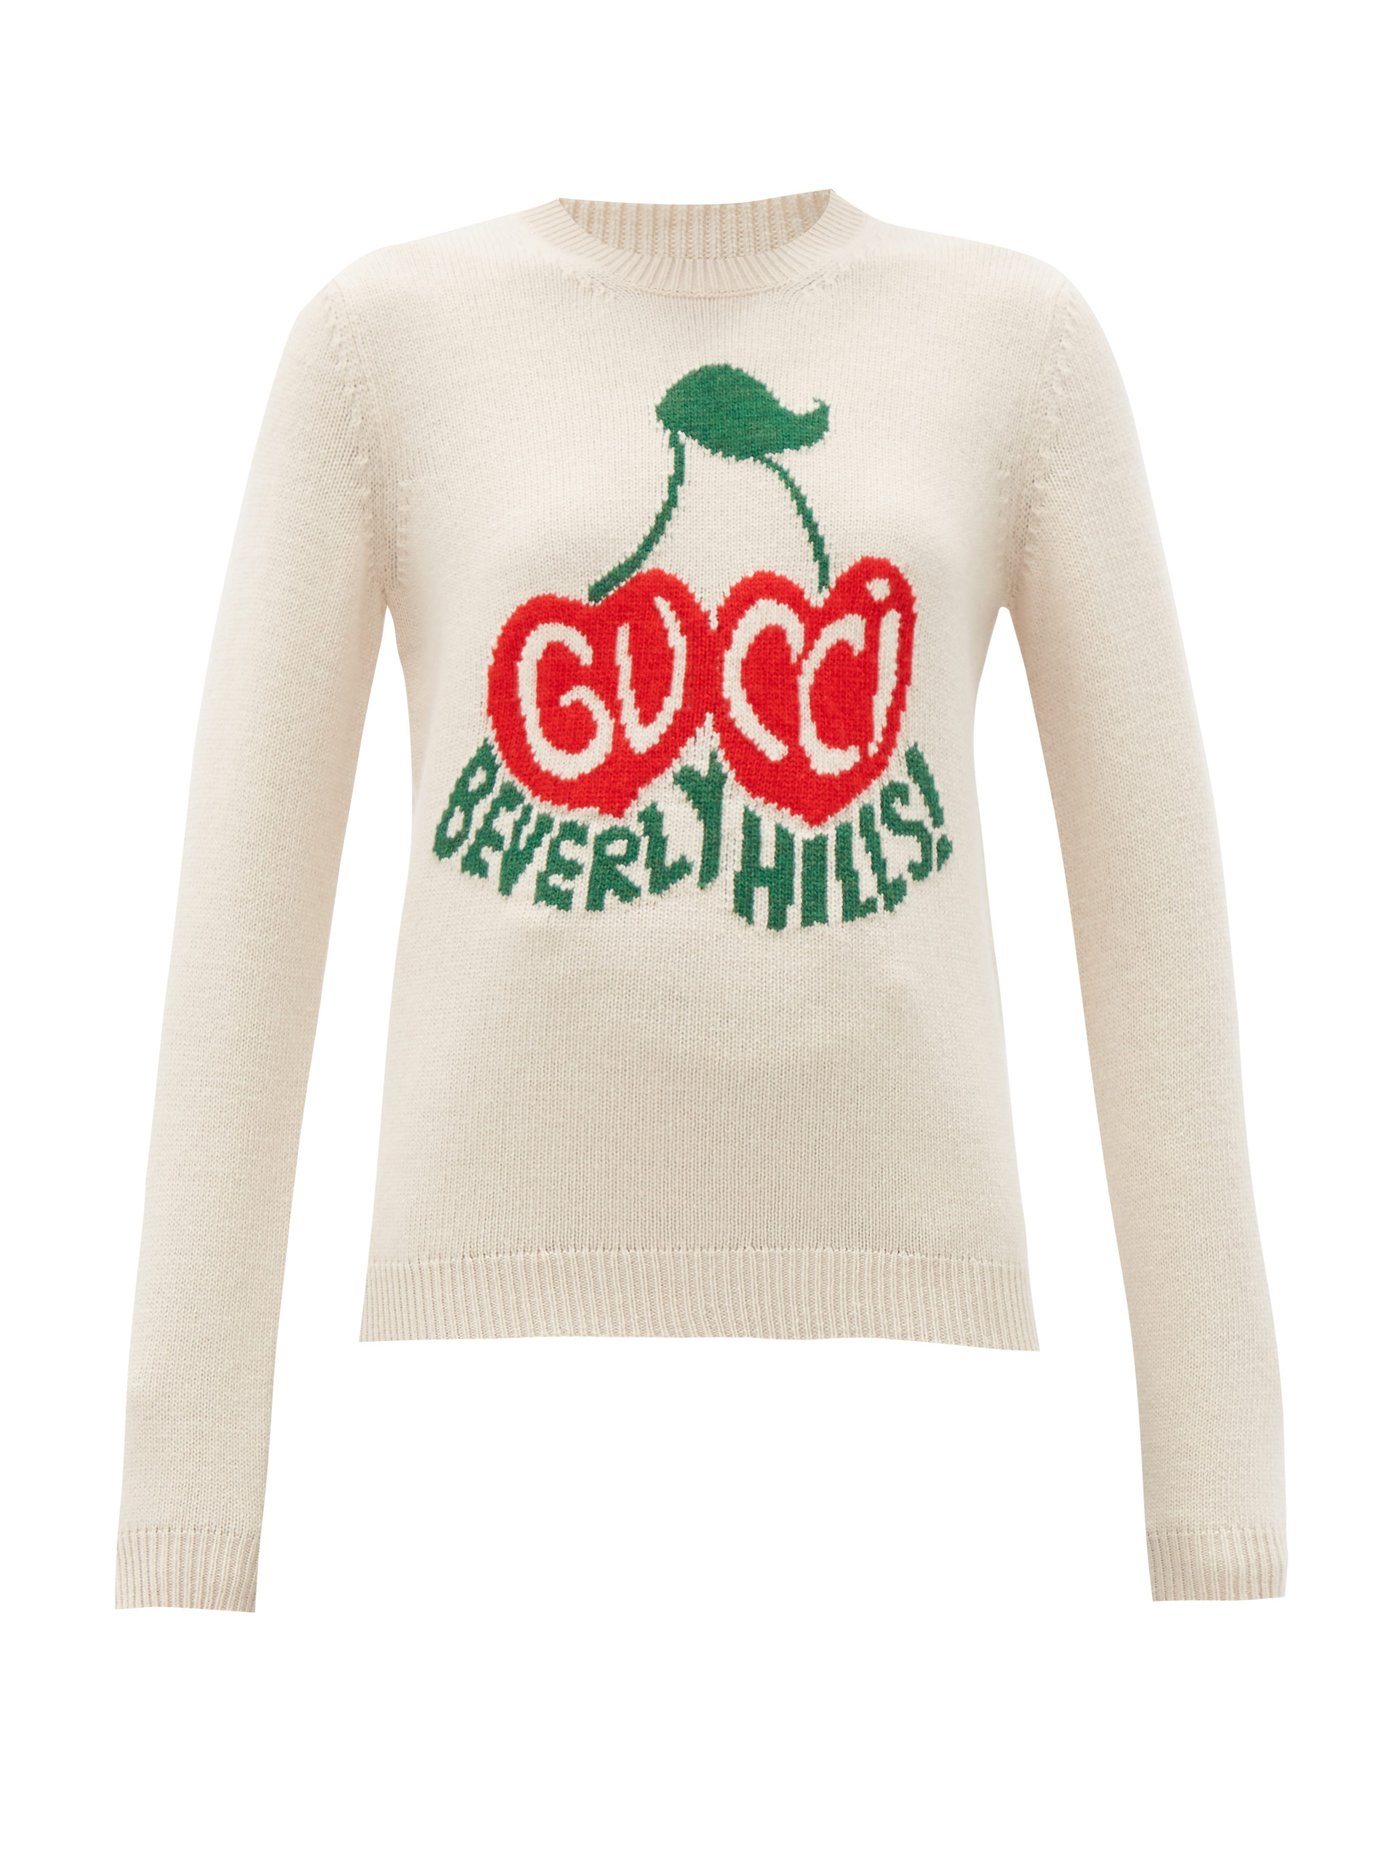 buy gucci sweater